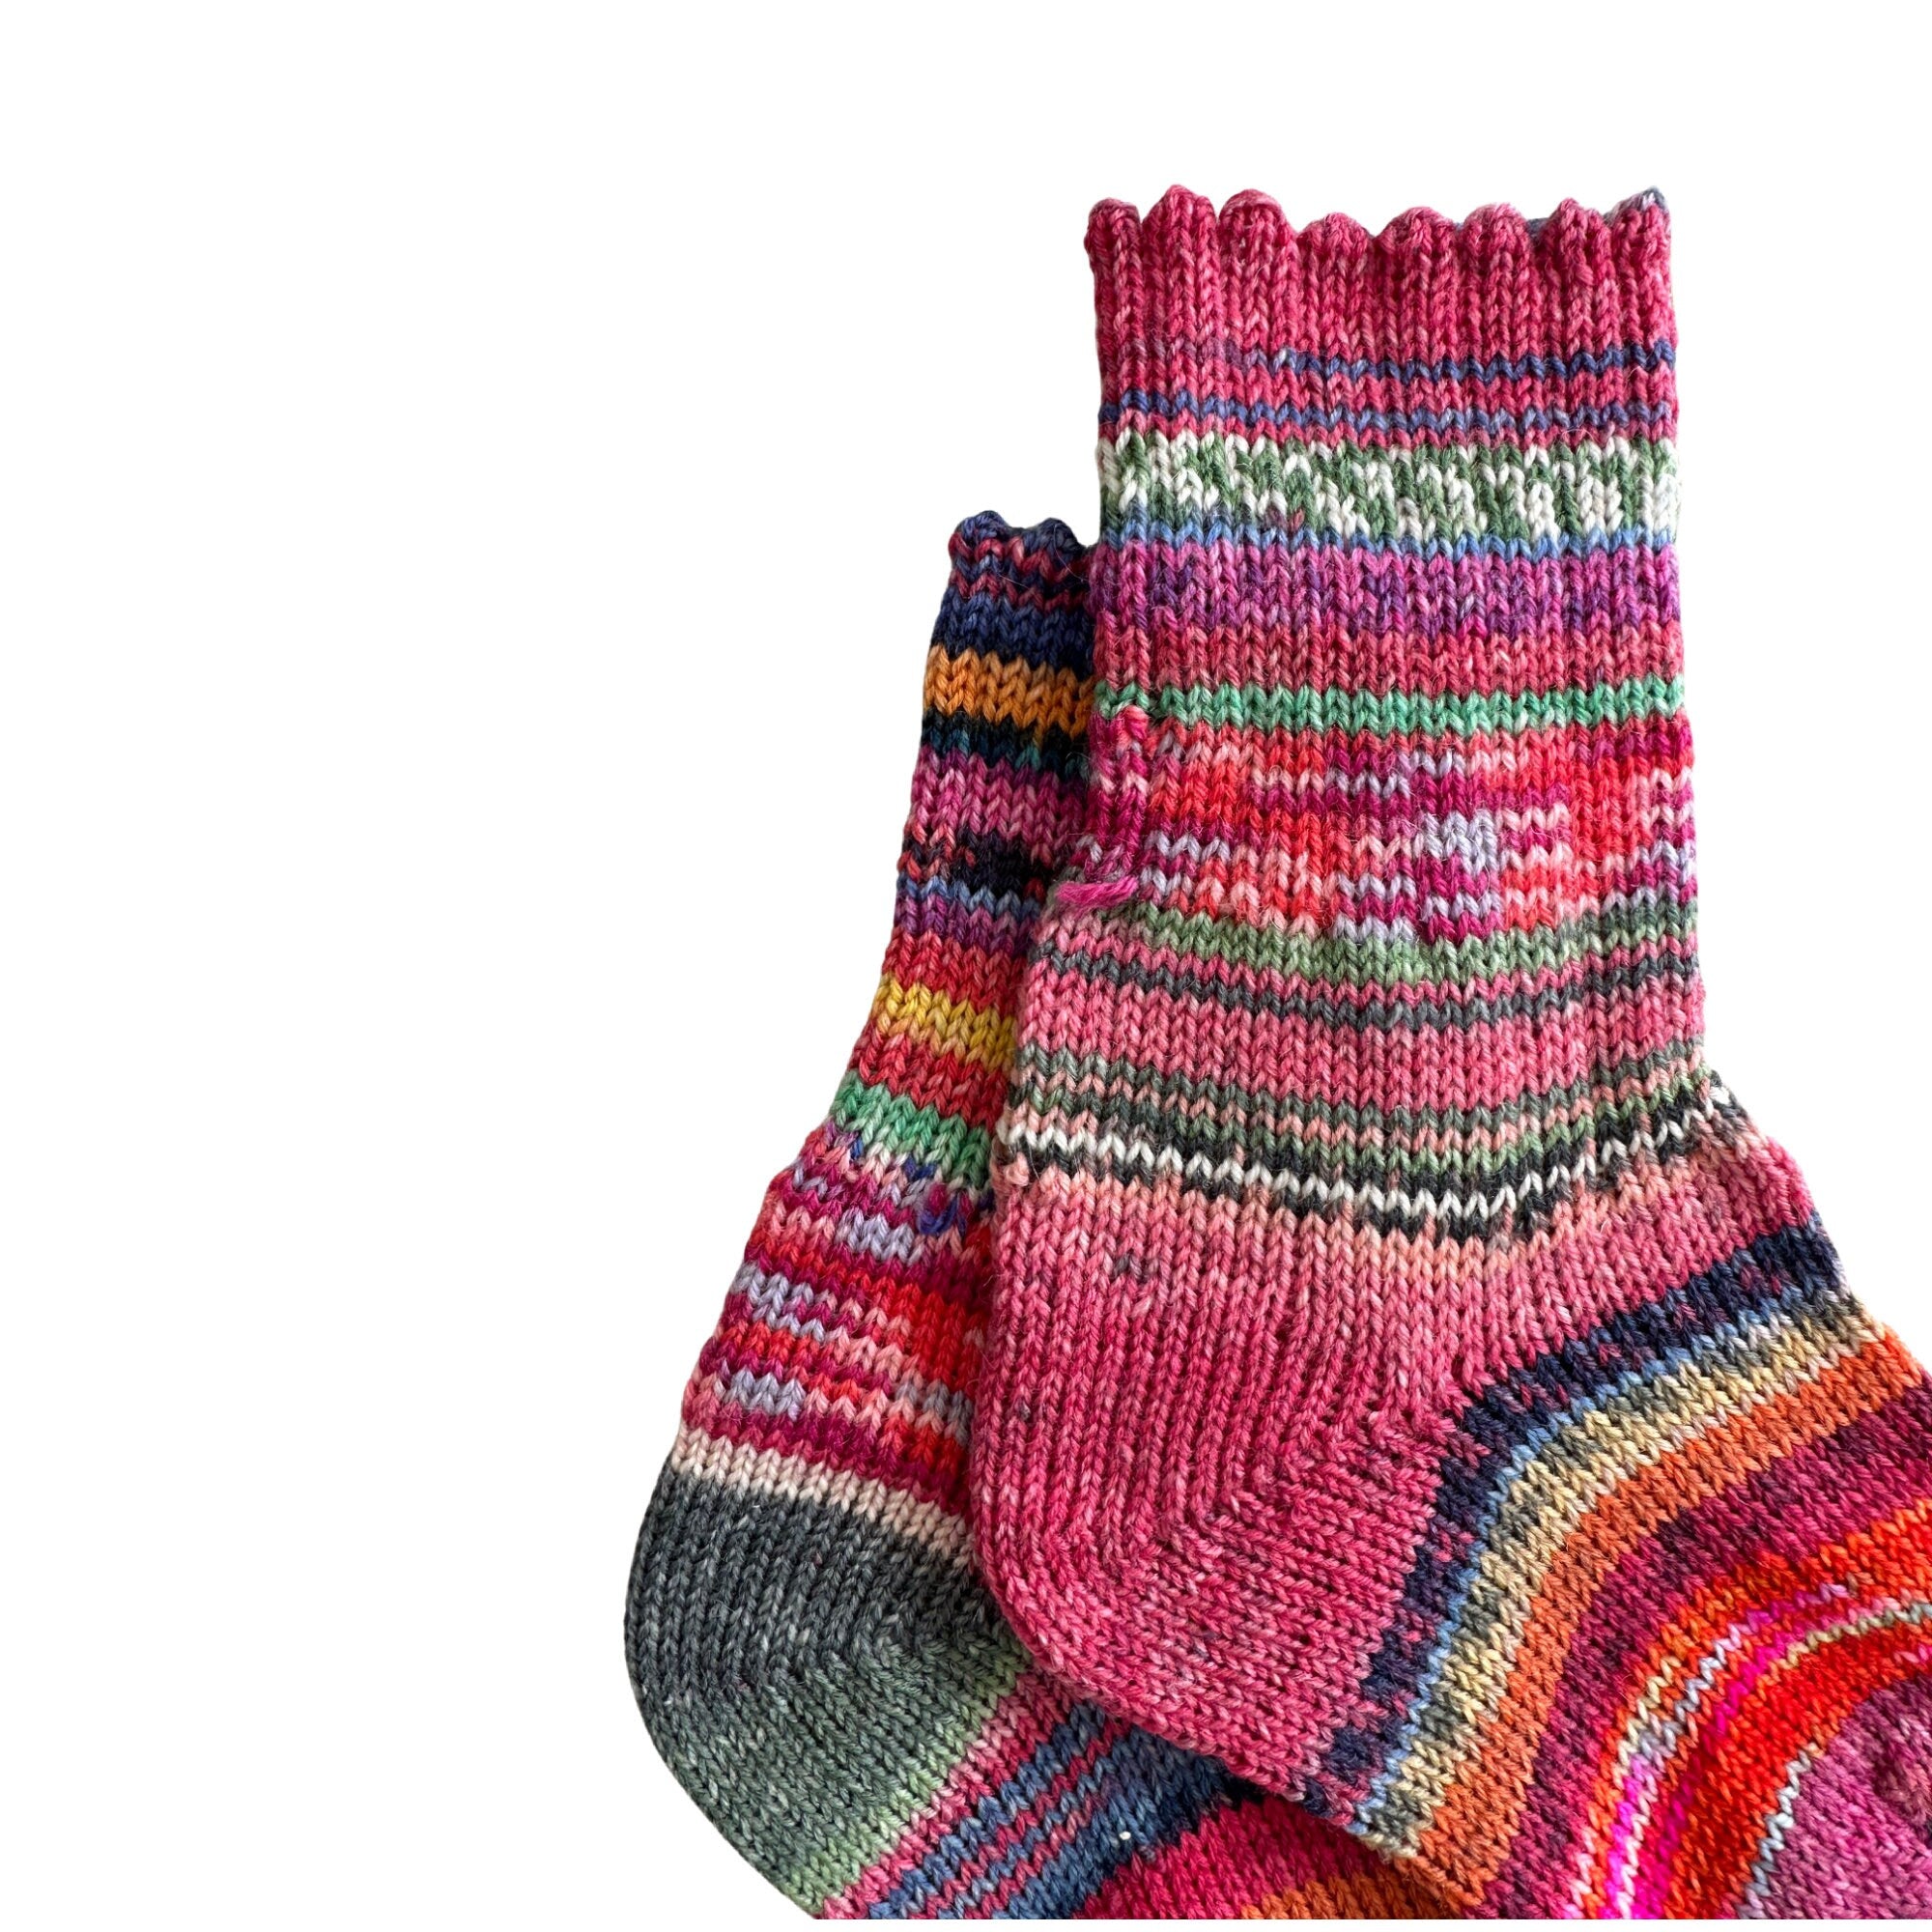 HandMade Children's Wool Socks, Colorful and Cozy, FrankenSocks